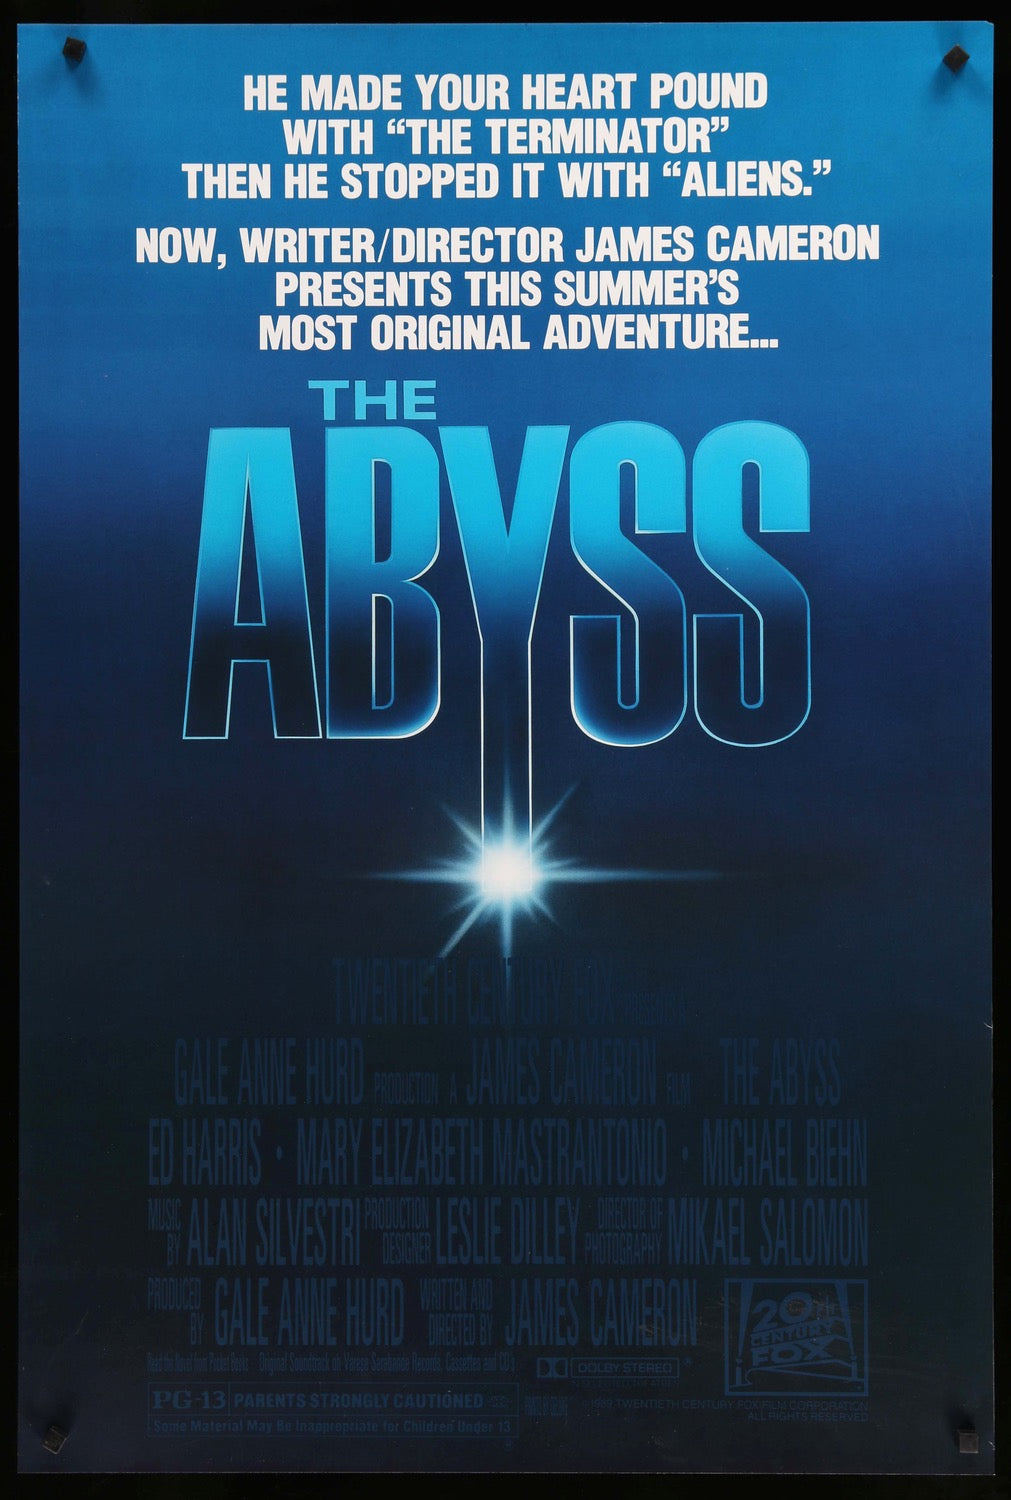 Abyss (1989) original movie poster for sale at Original Film Art